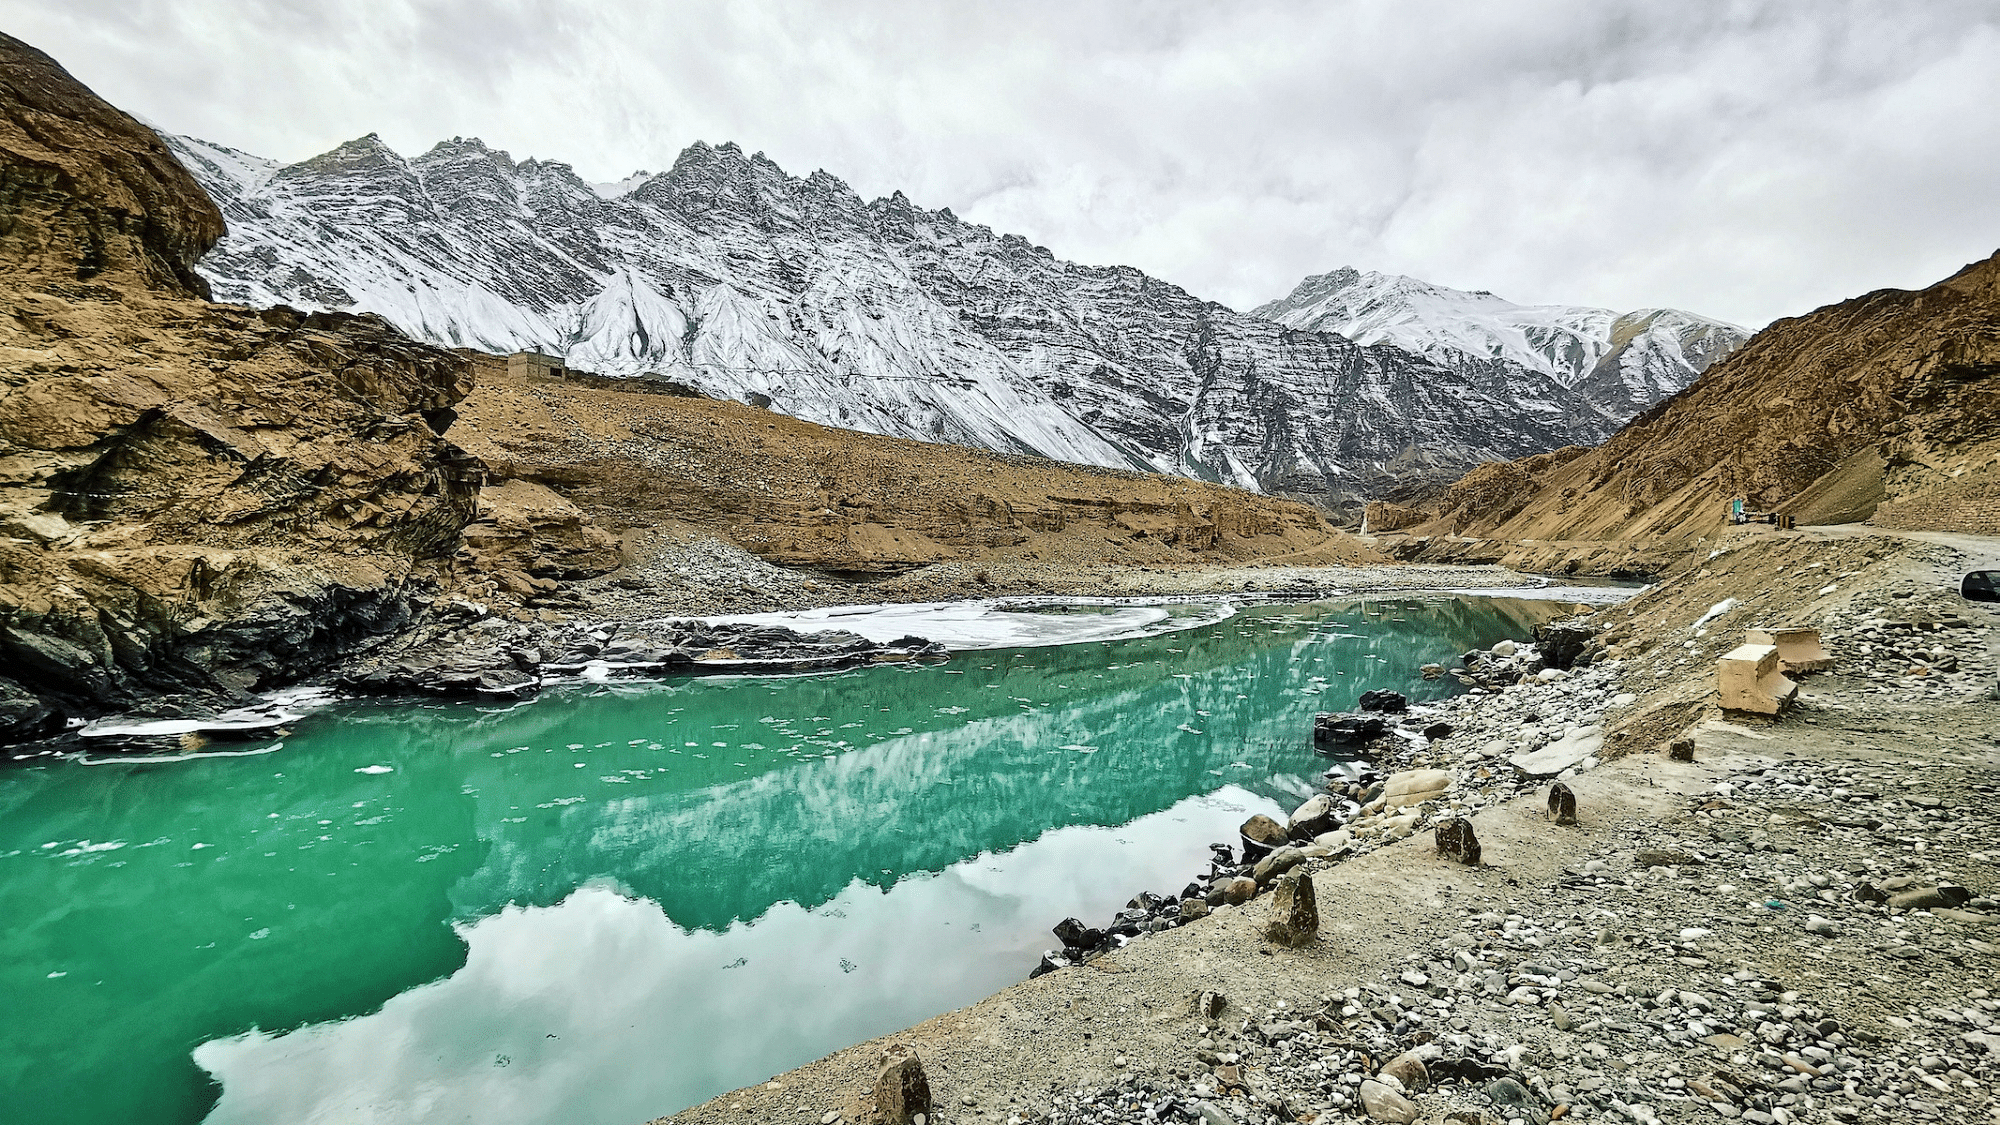 The Indus River near Alchi monastery, near Leh.